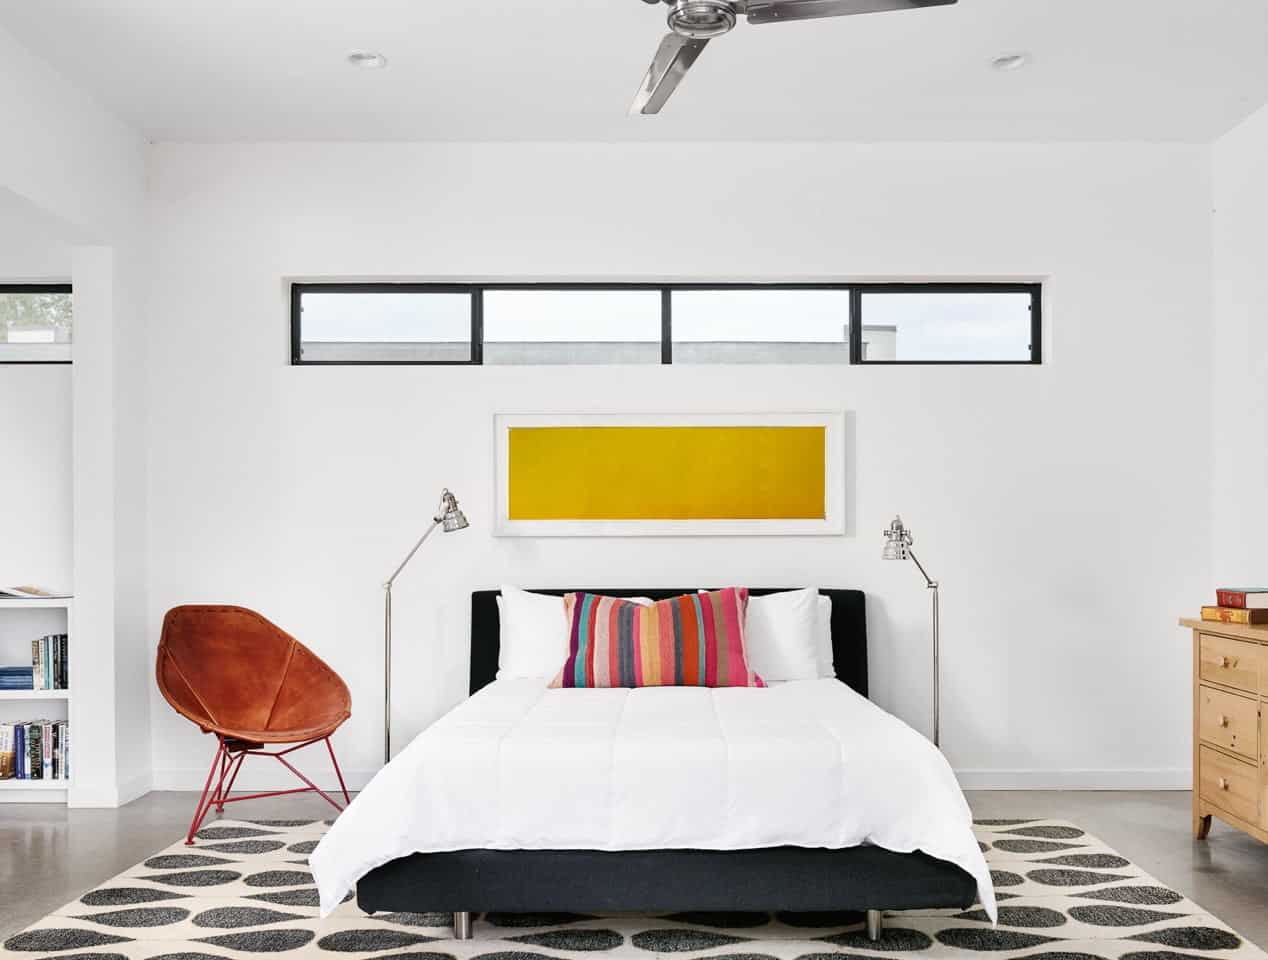 MA Modular Marfa model modern prefab home with view of master bedroom interior.